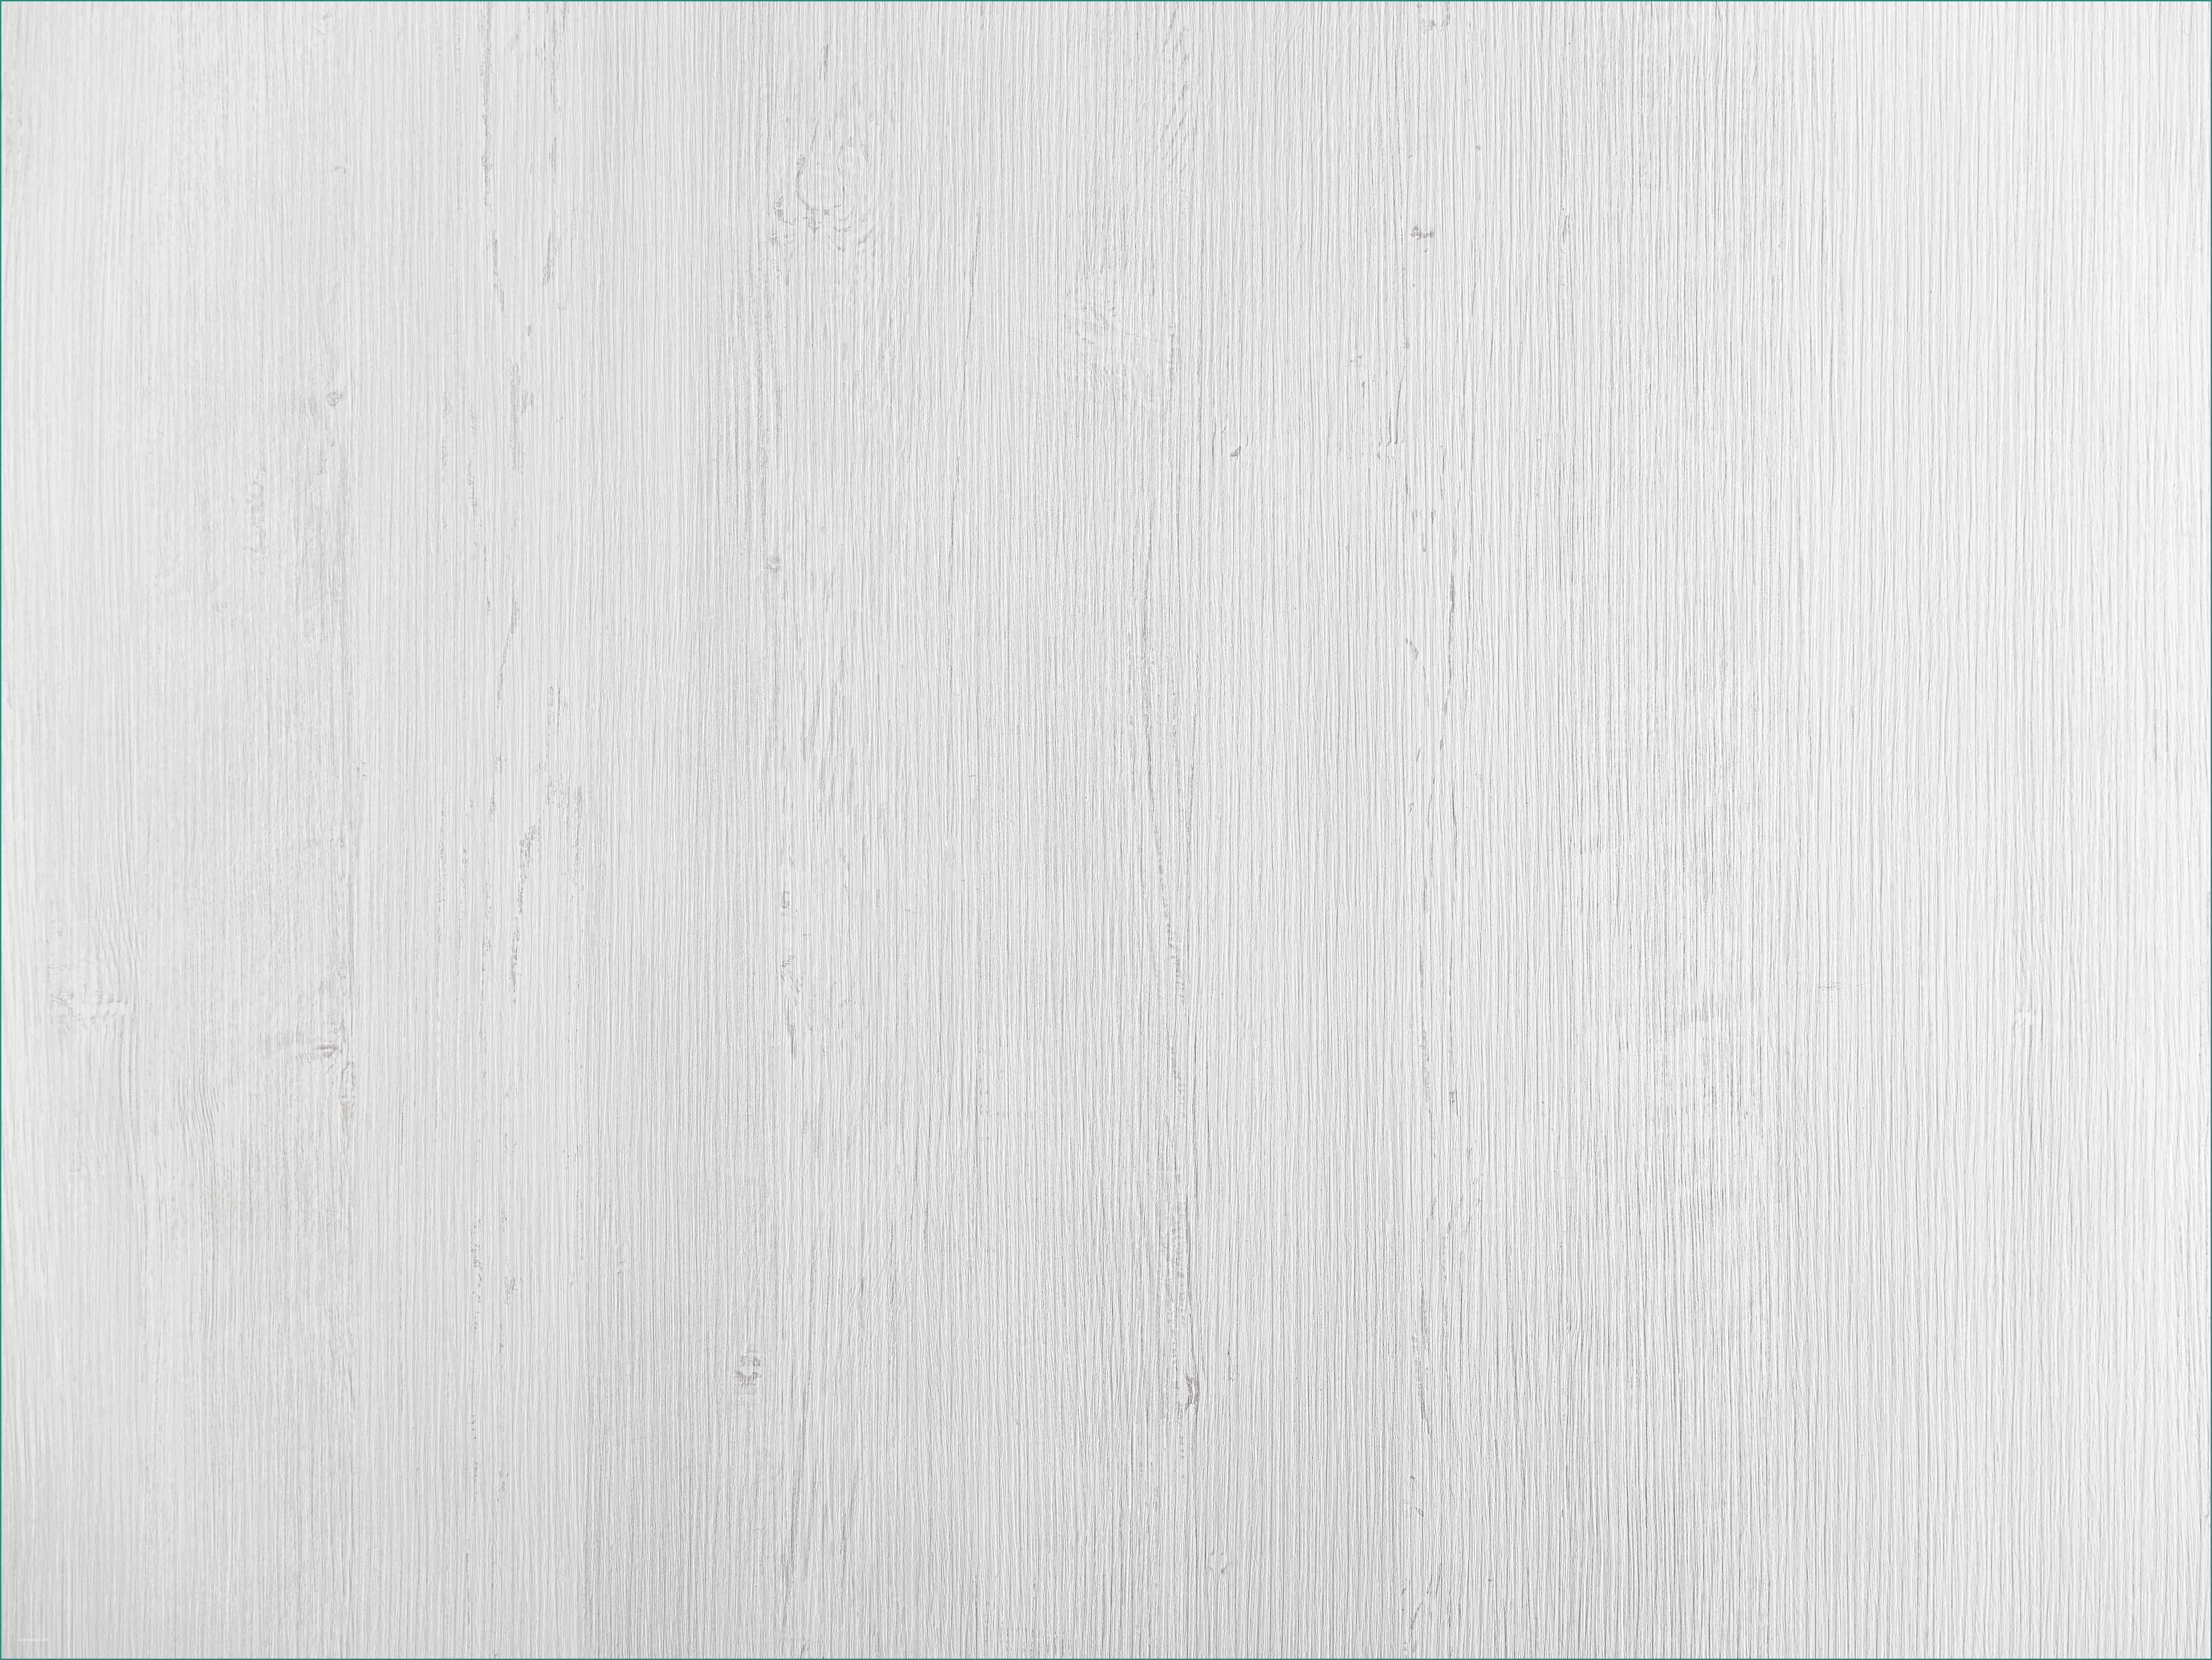 Leroy Merlin Battiscopa E 8902 Woodgrain White Painted Wood ç½æ¼æ¨ å±±